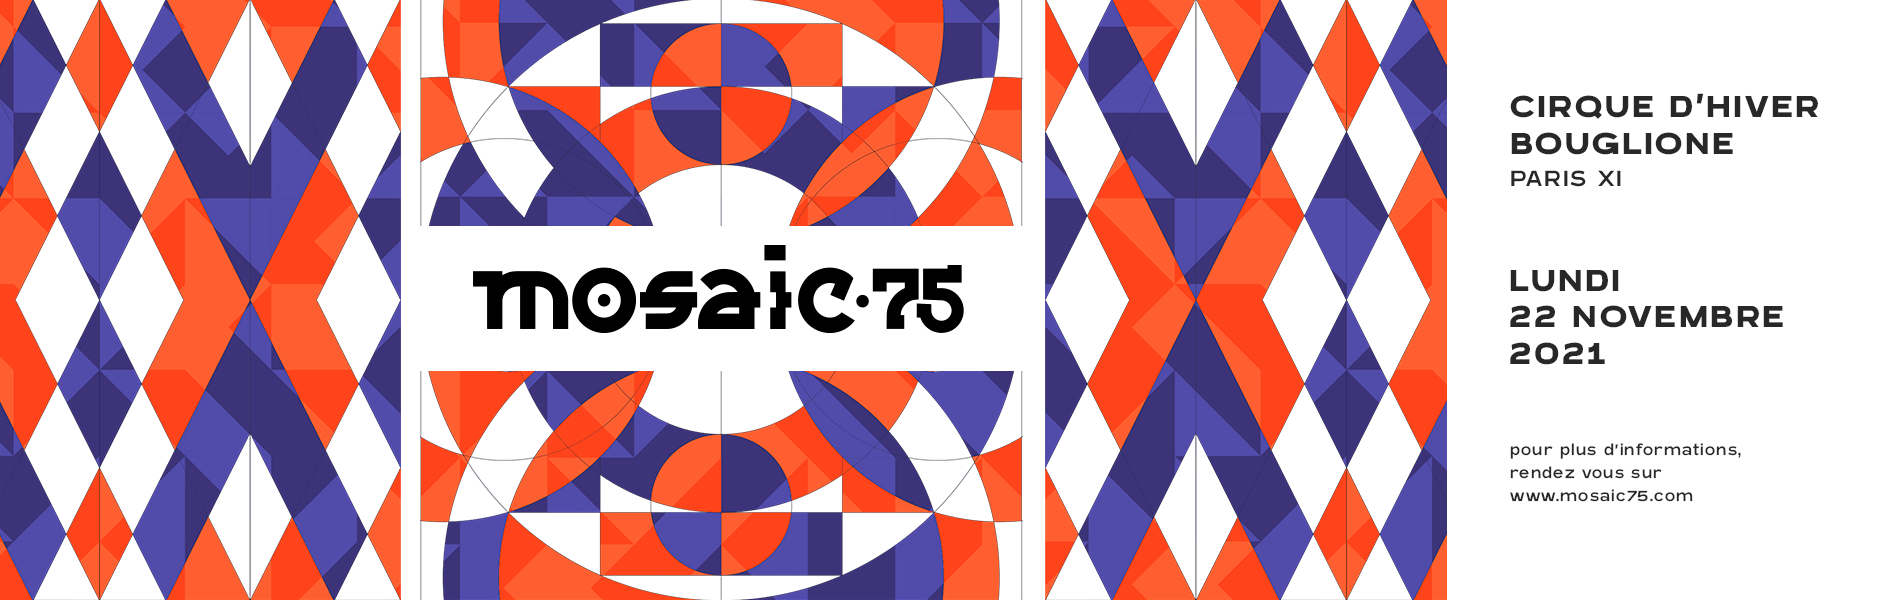 mosaic75